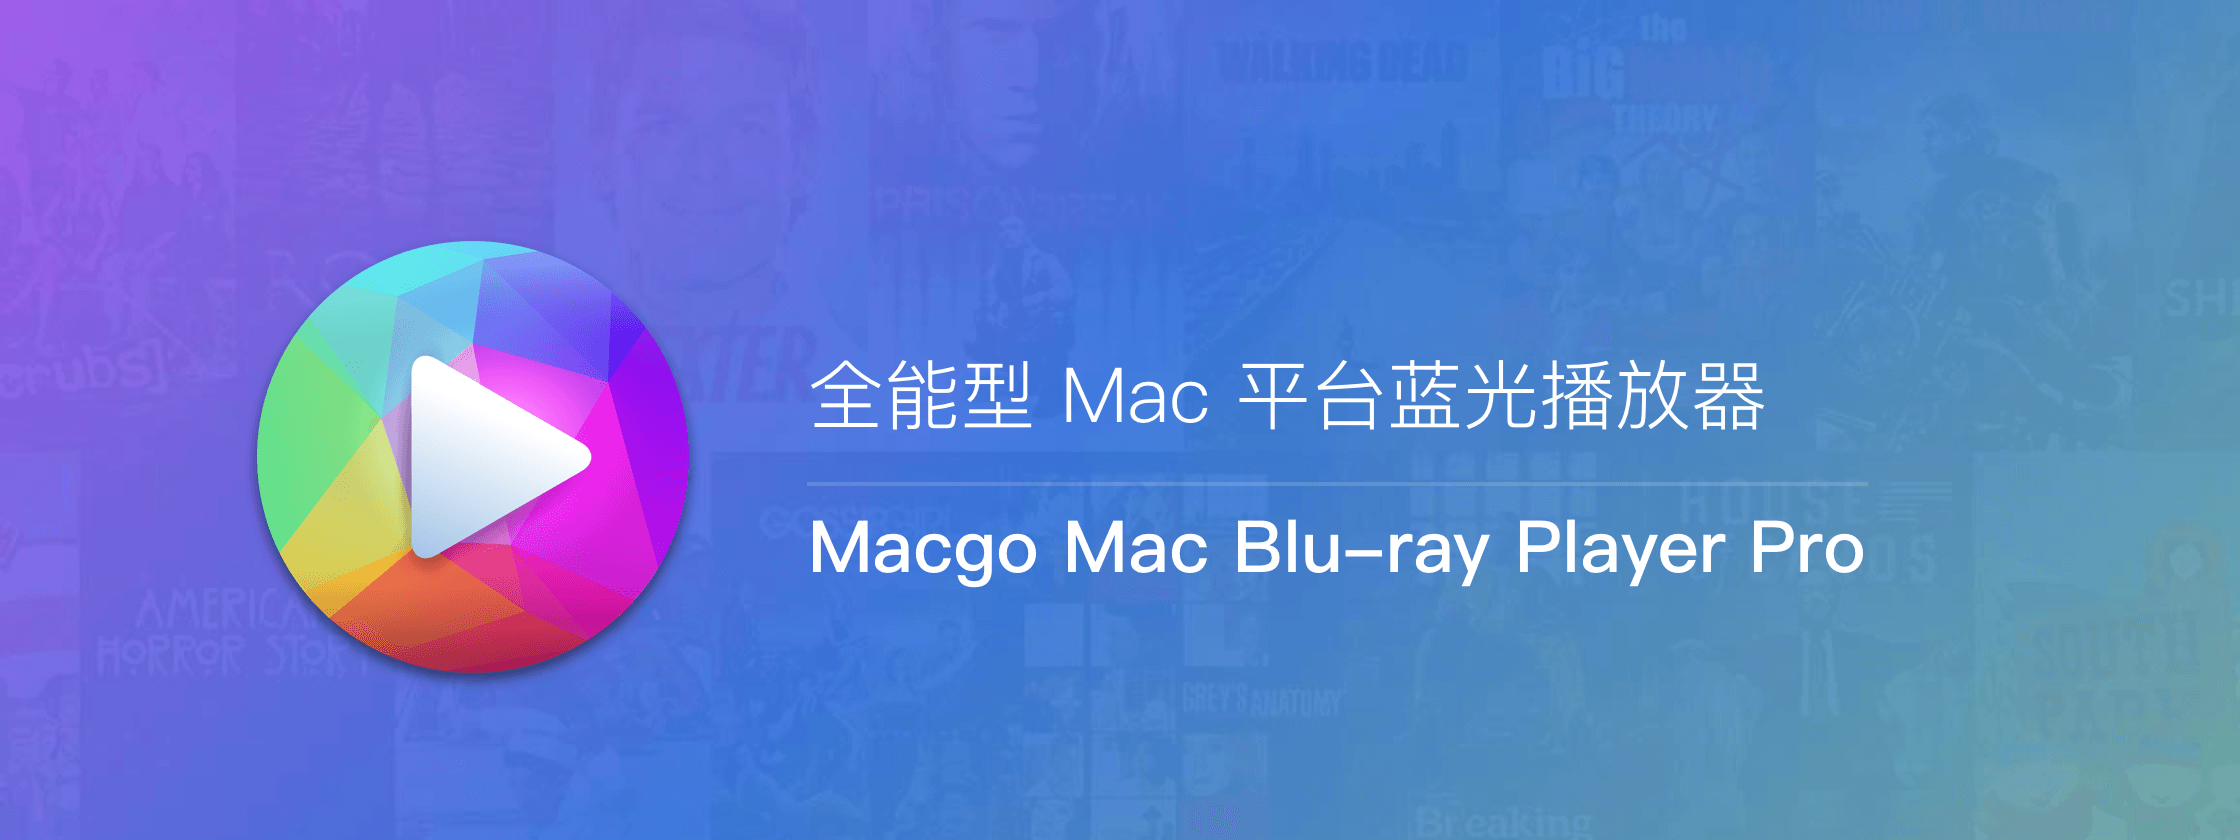 Macgo Mac Blu-ray Player Pro，全能型 Mac 平台蓝光播放器